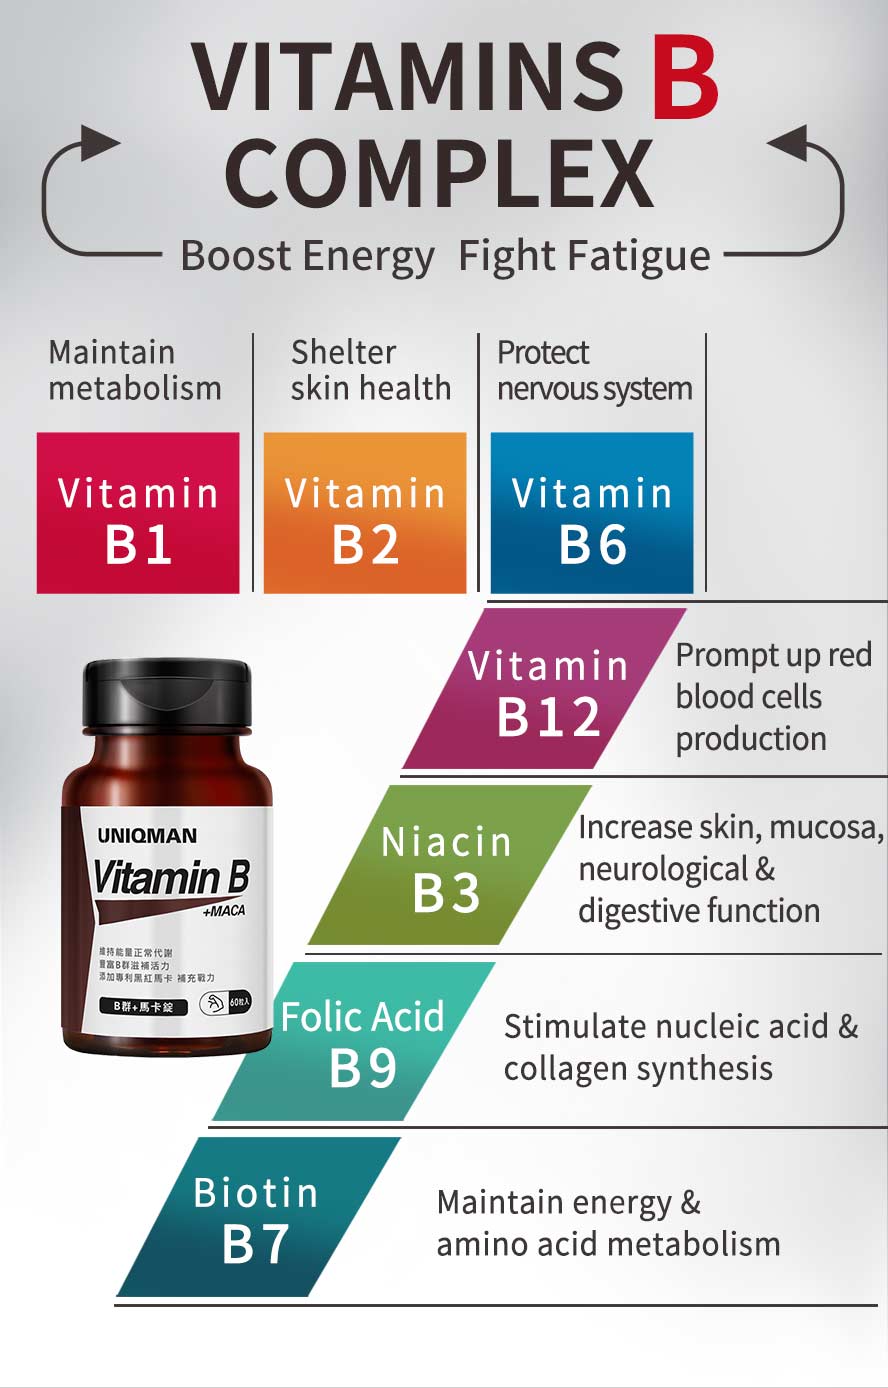 UNIQMAN B complex contains Vitamin B1, B2, B6, B12, B3, to maintain nervous system health and mood balancing